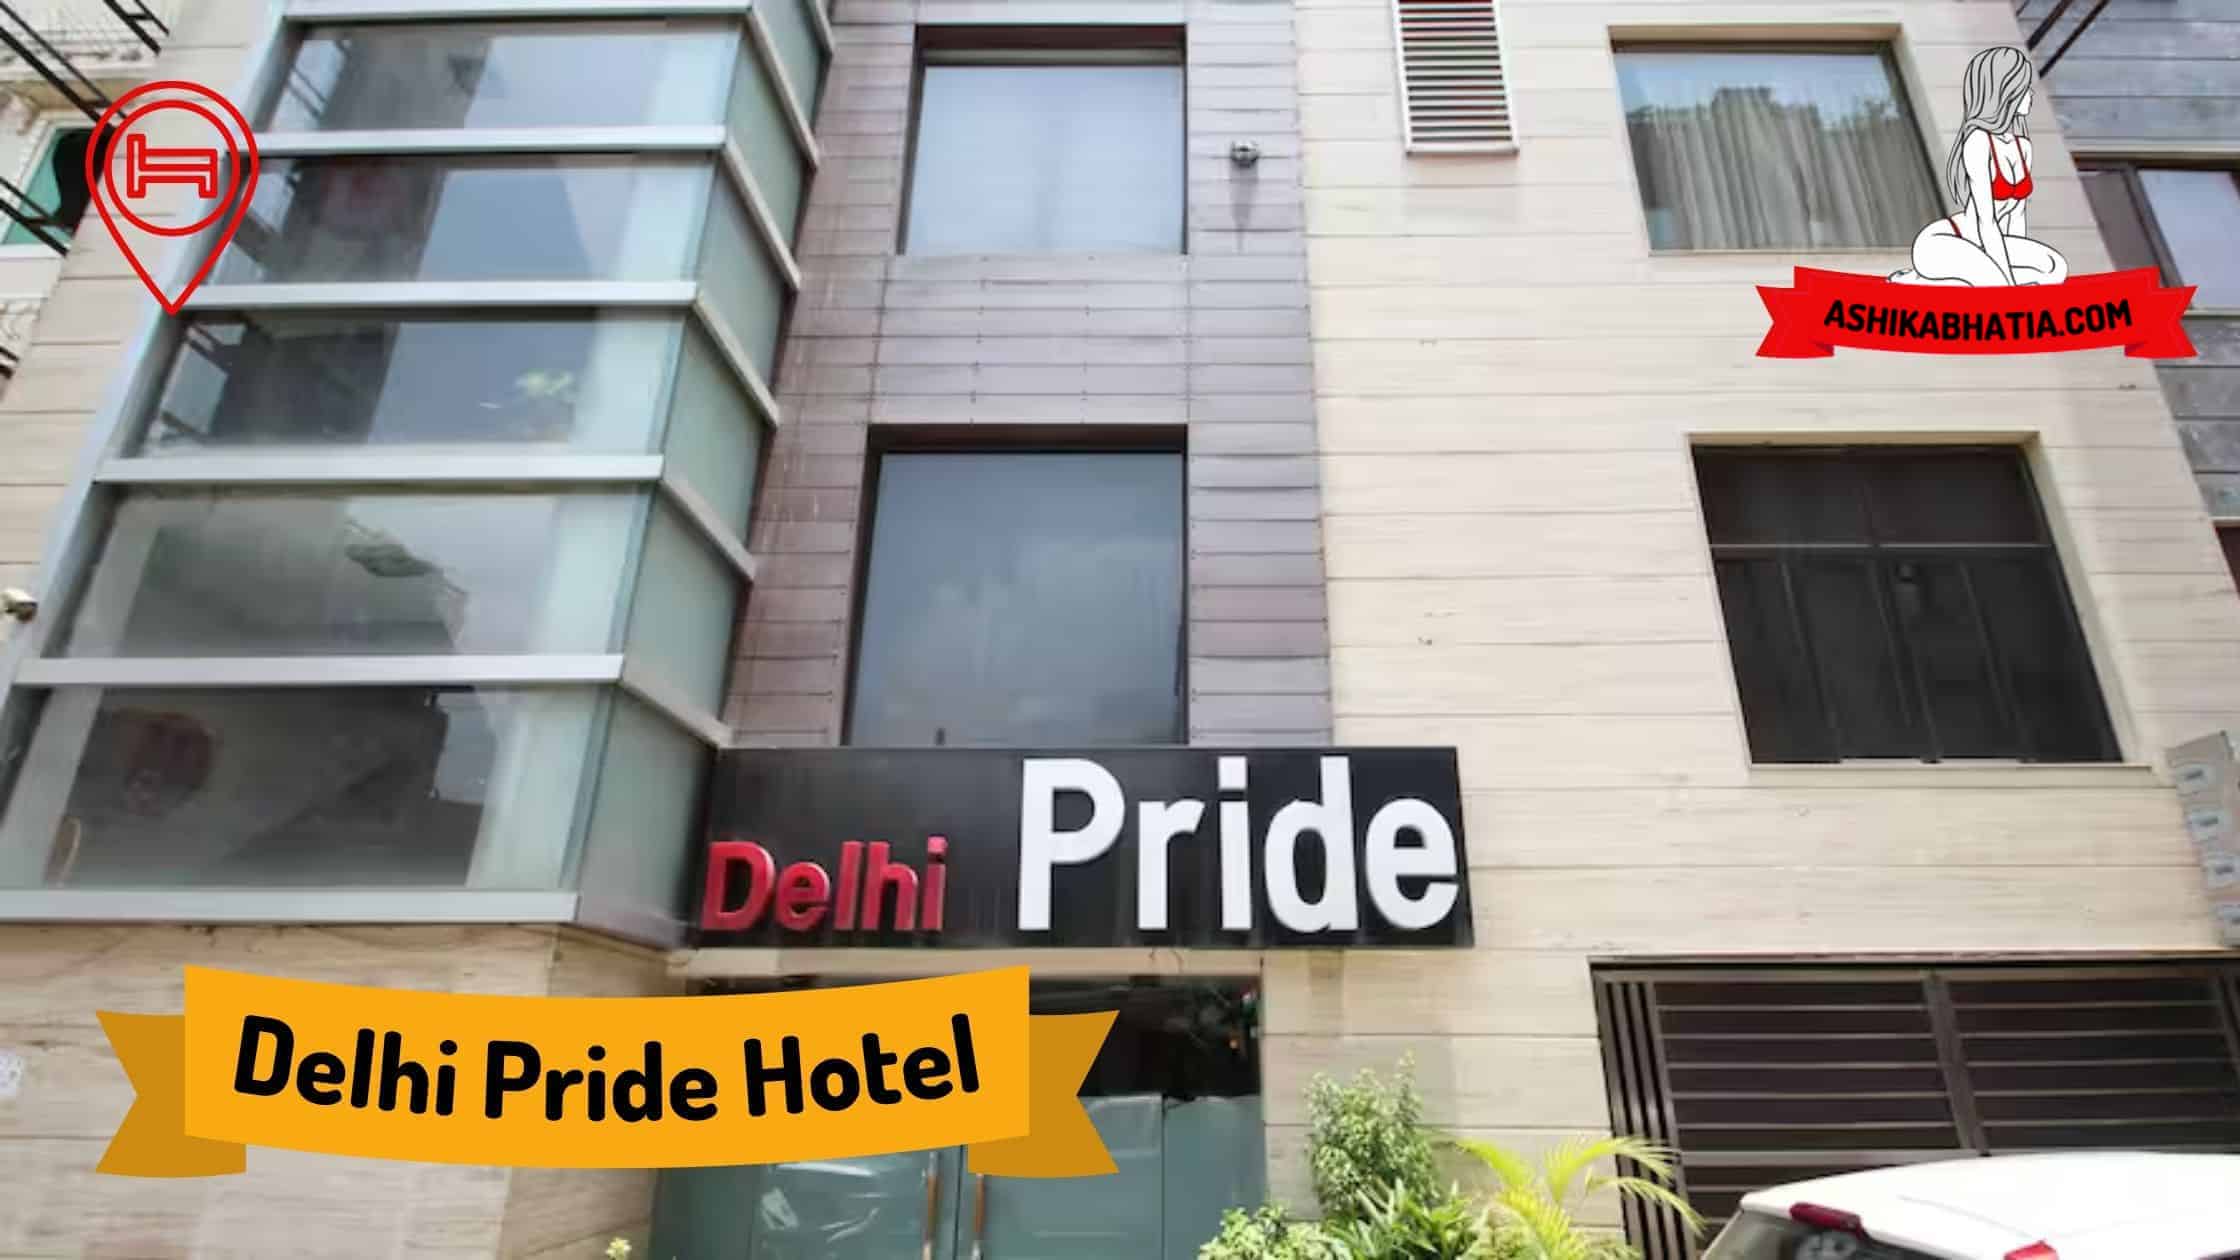 Delhi Pride Hotel Escorts